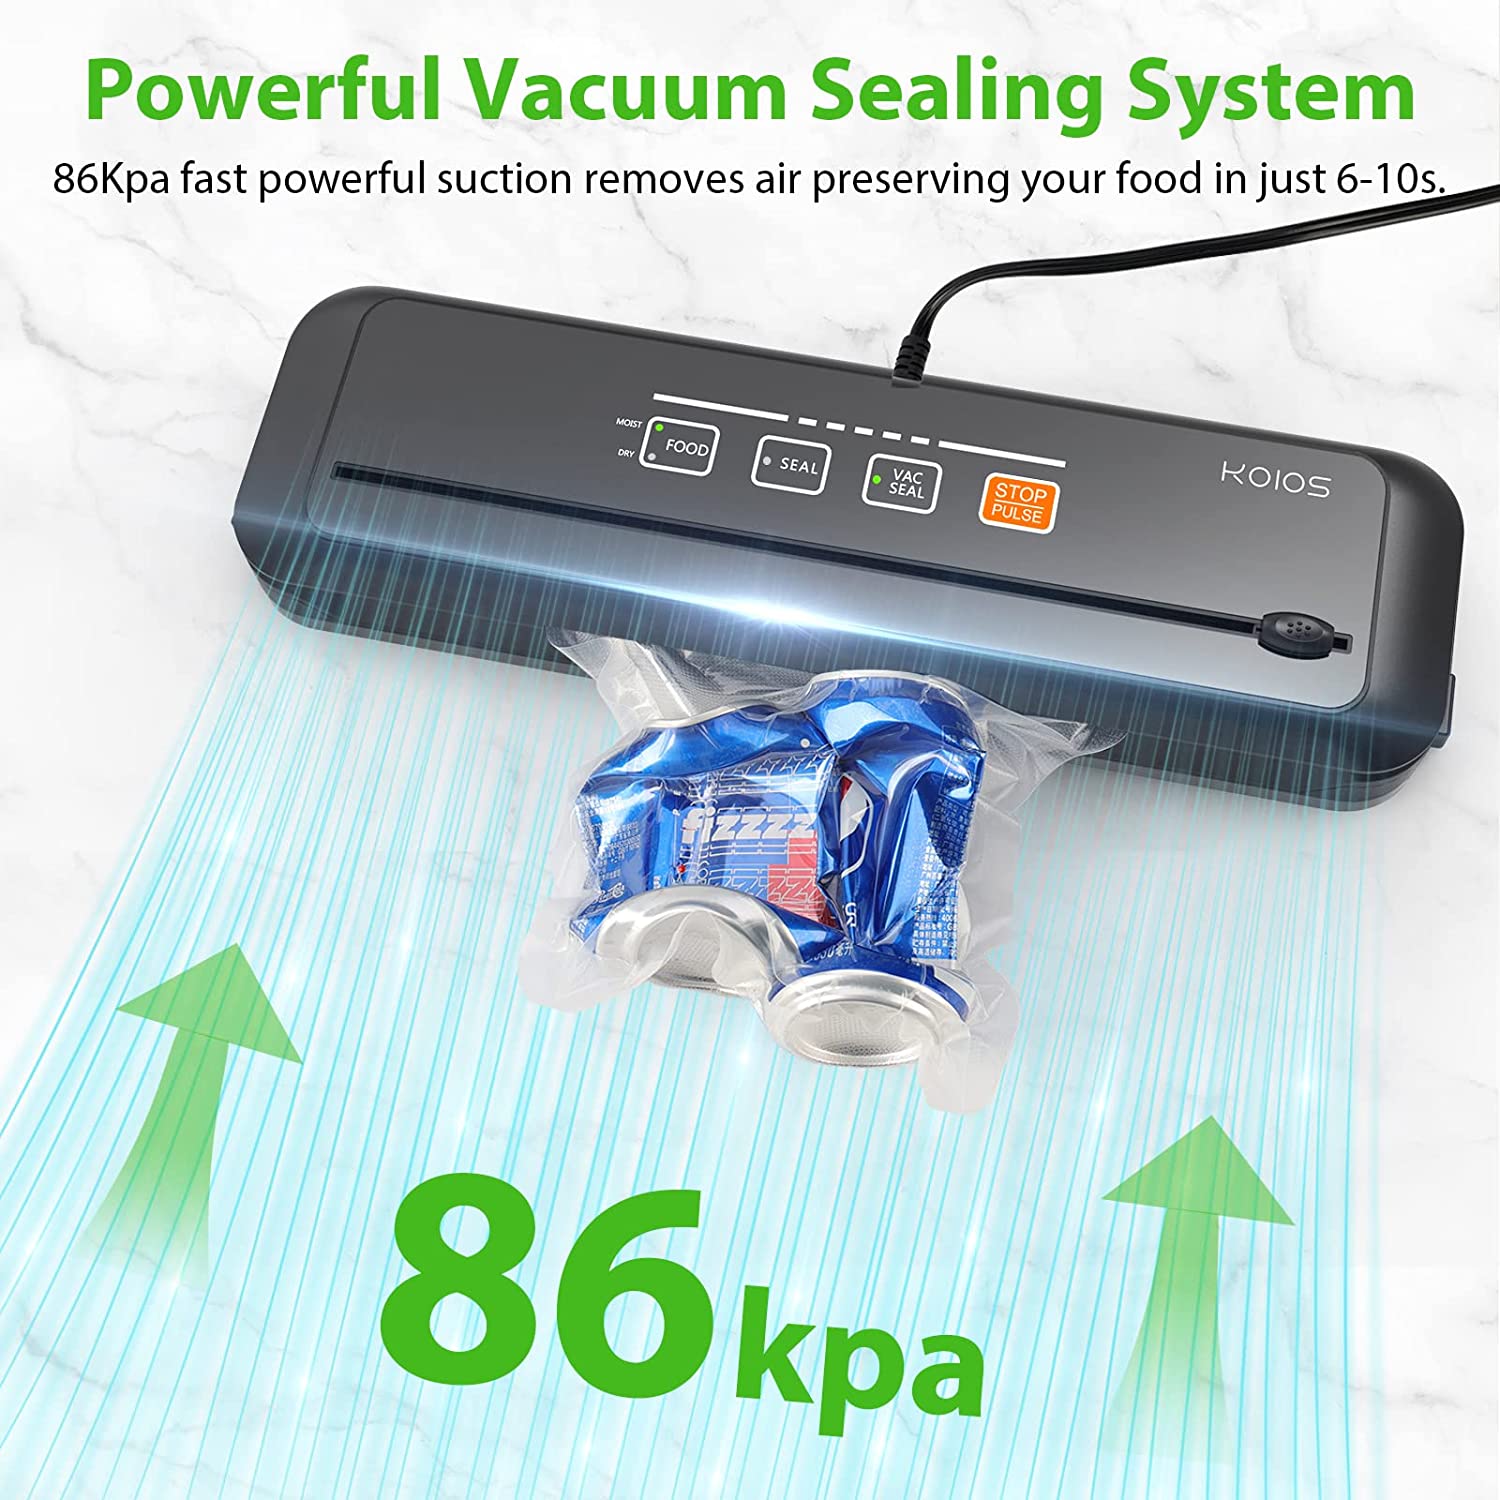 Powerful Vacuum Sealing System